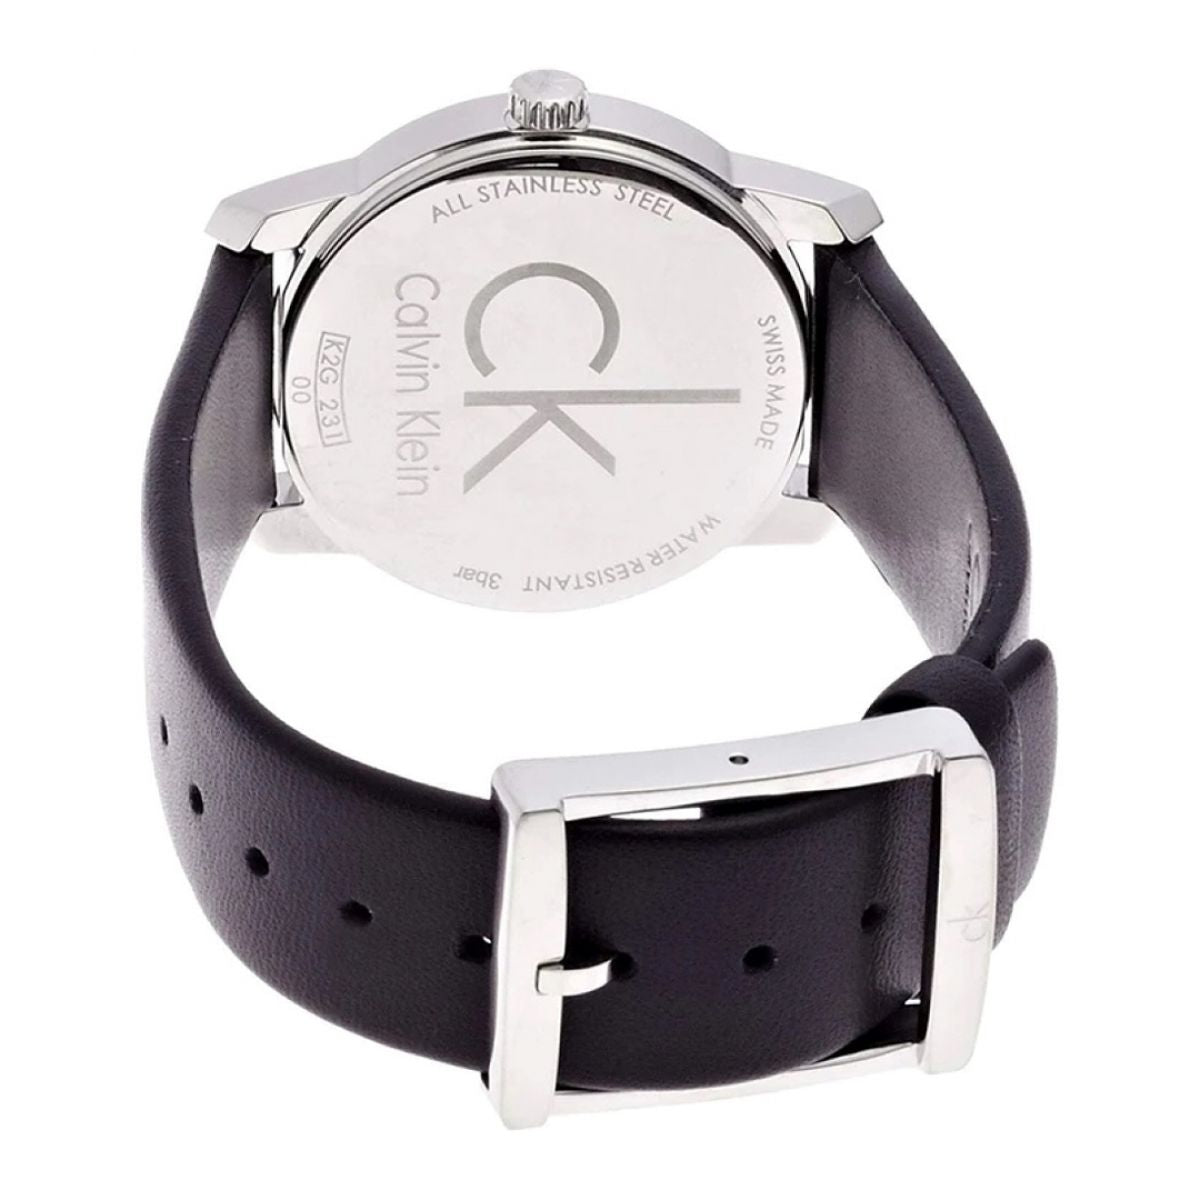 Calvin Klein K2G231C6 Dames Horloge 36mm 3ATM